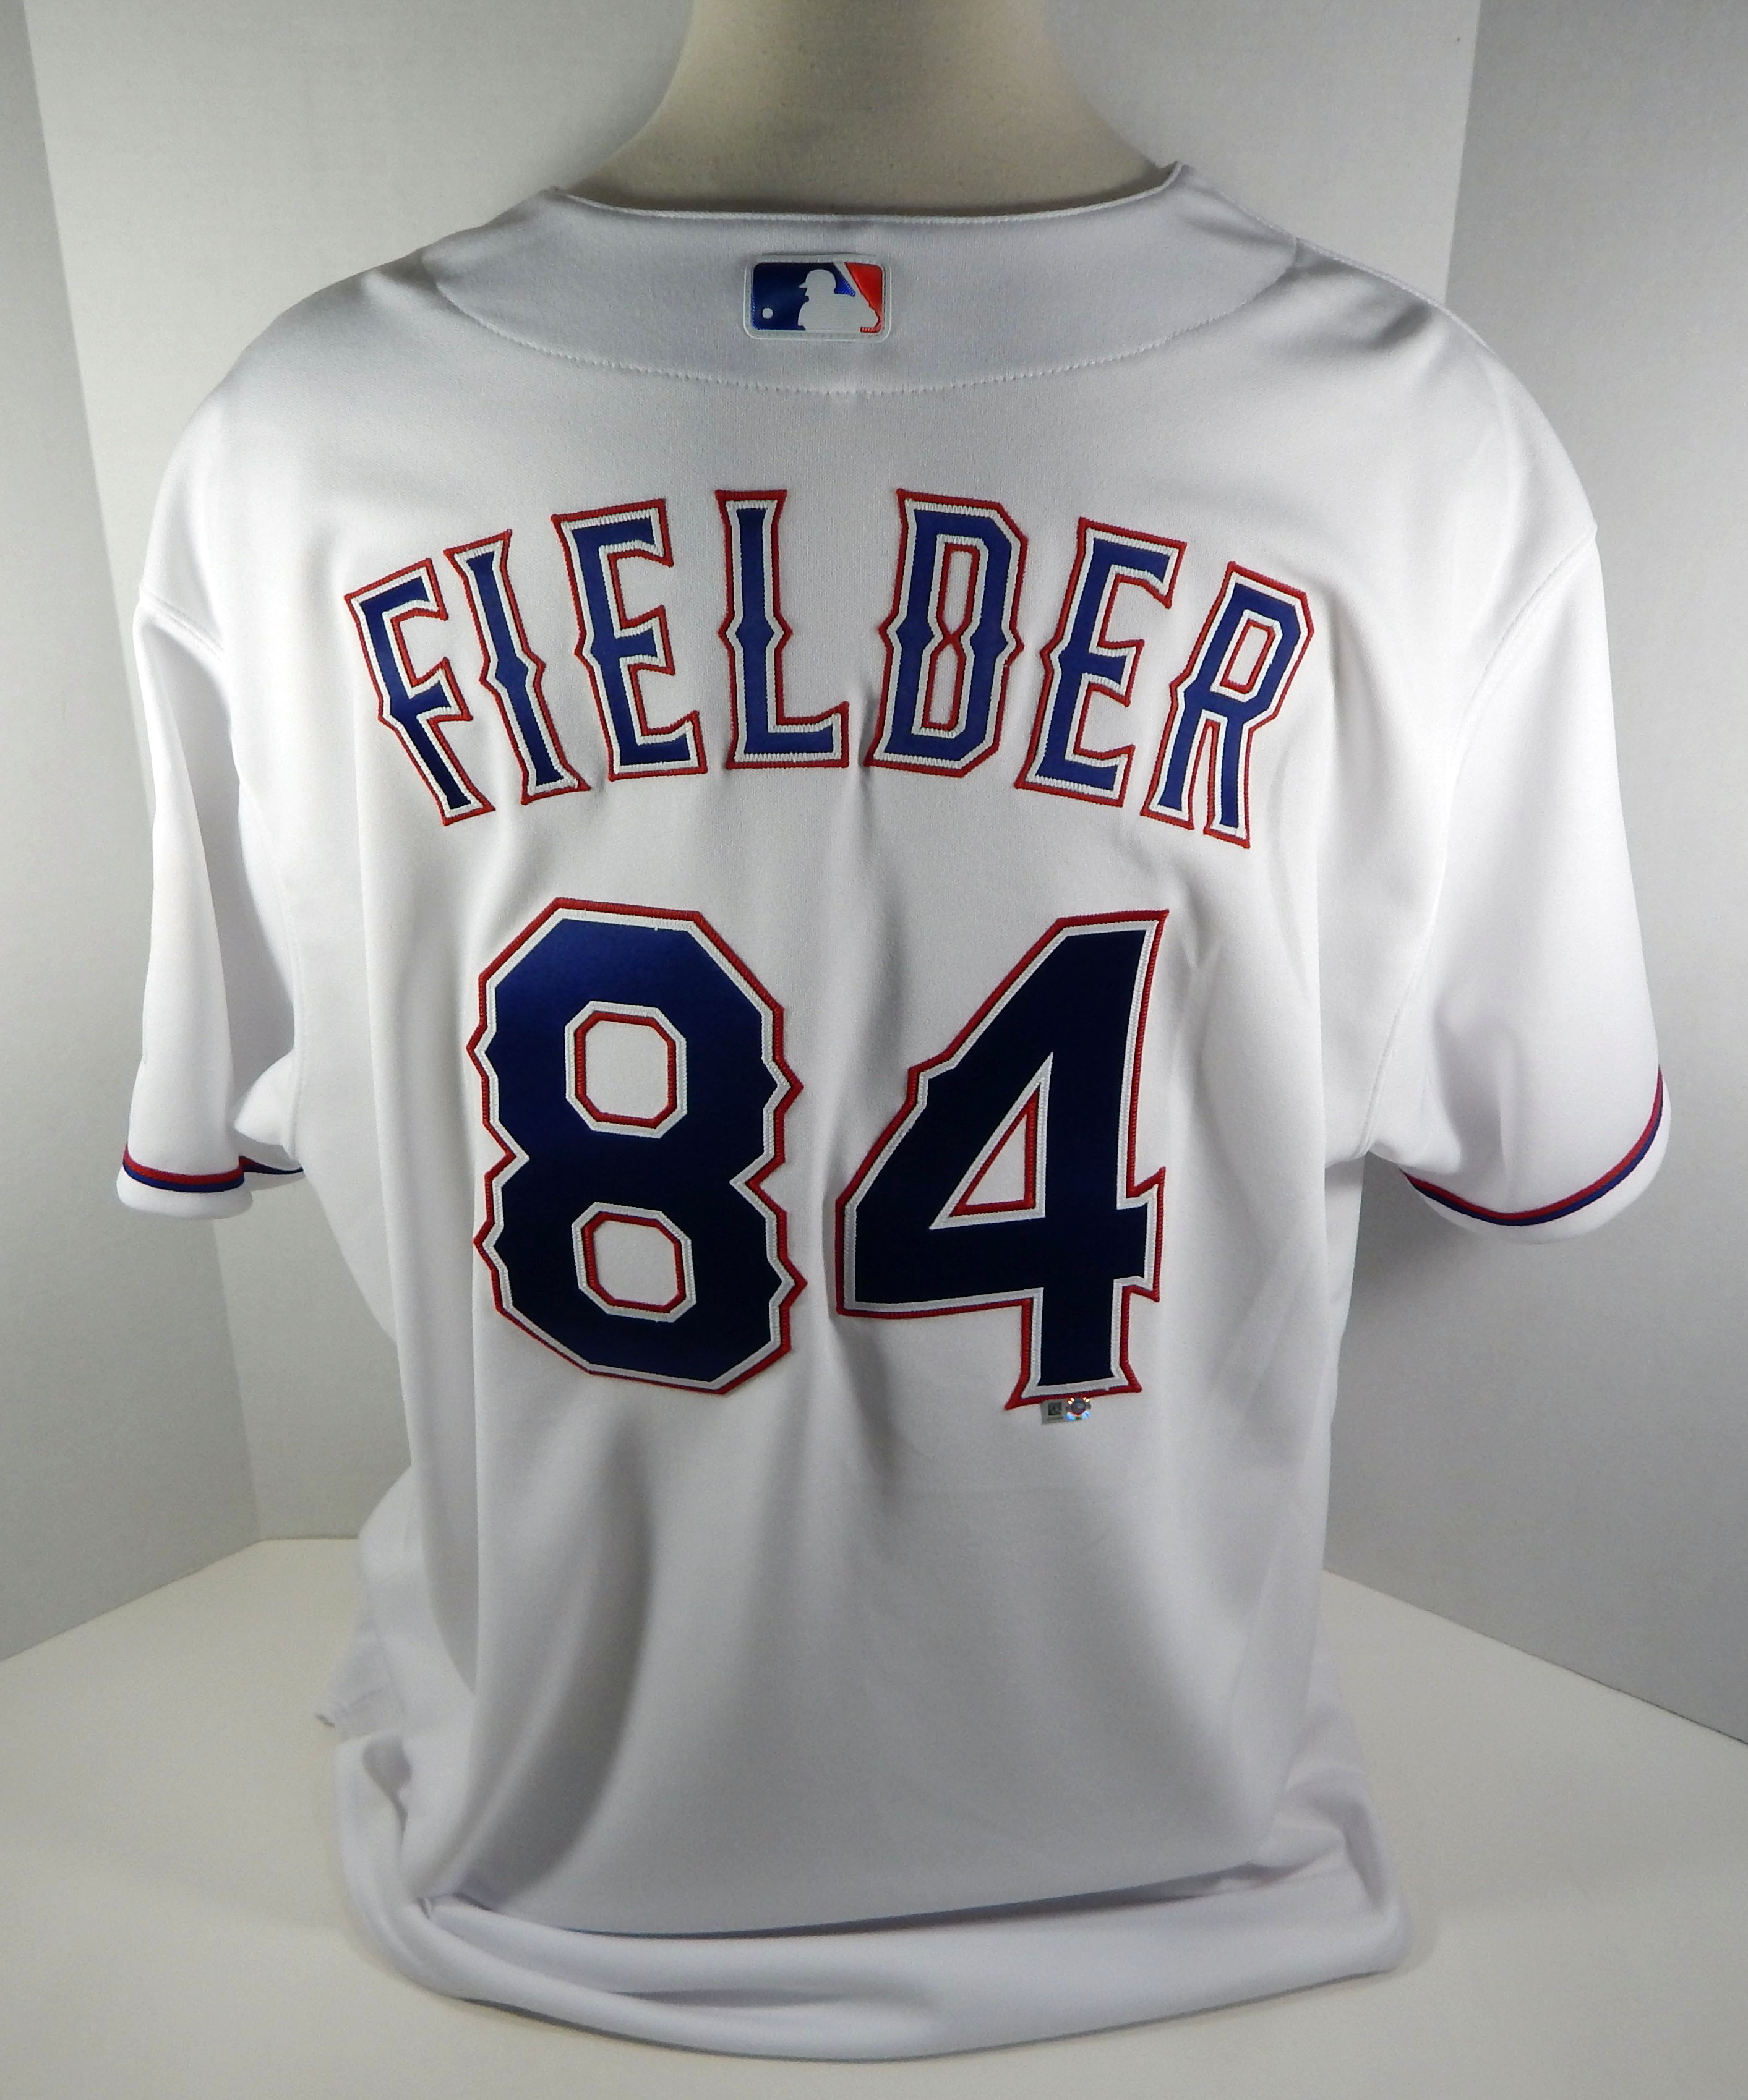 2016 Texas Rangers Prince Fielder #84 Game Issued White Jersey | eBay